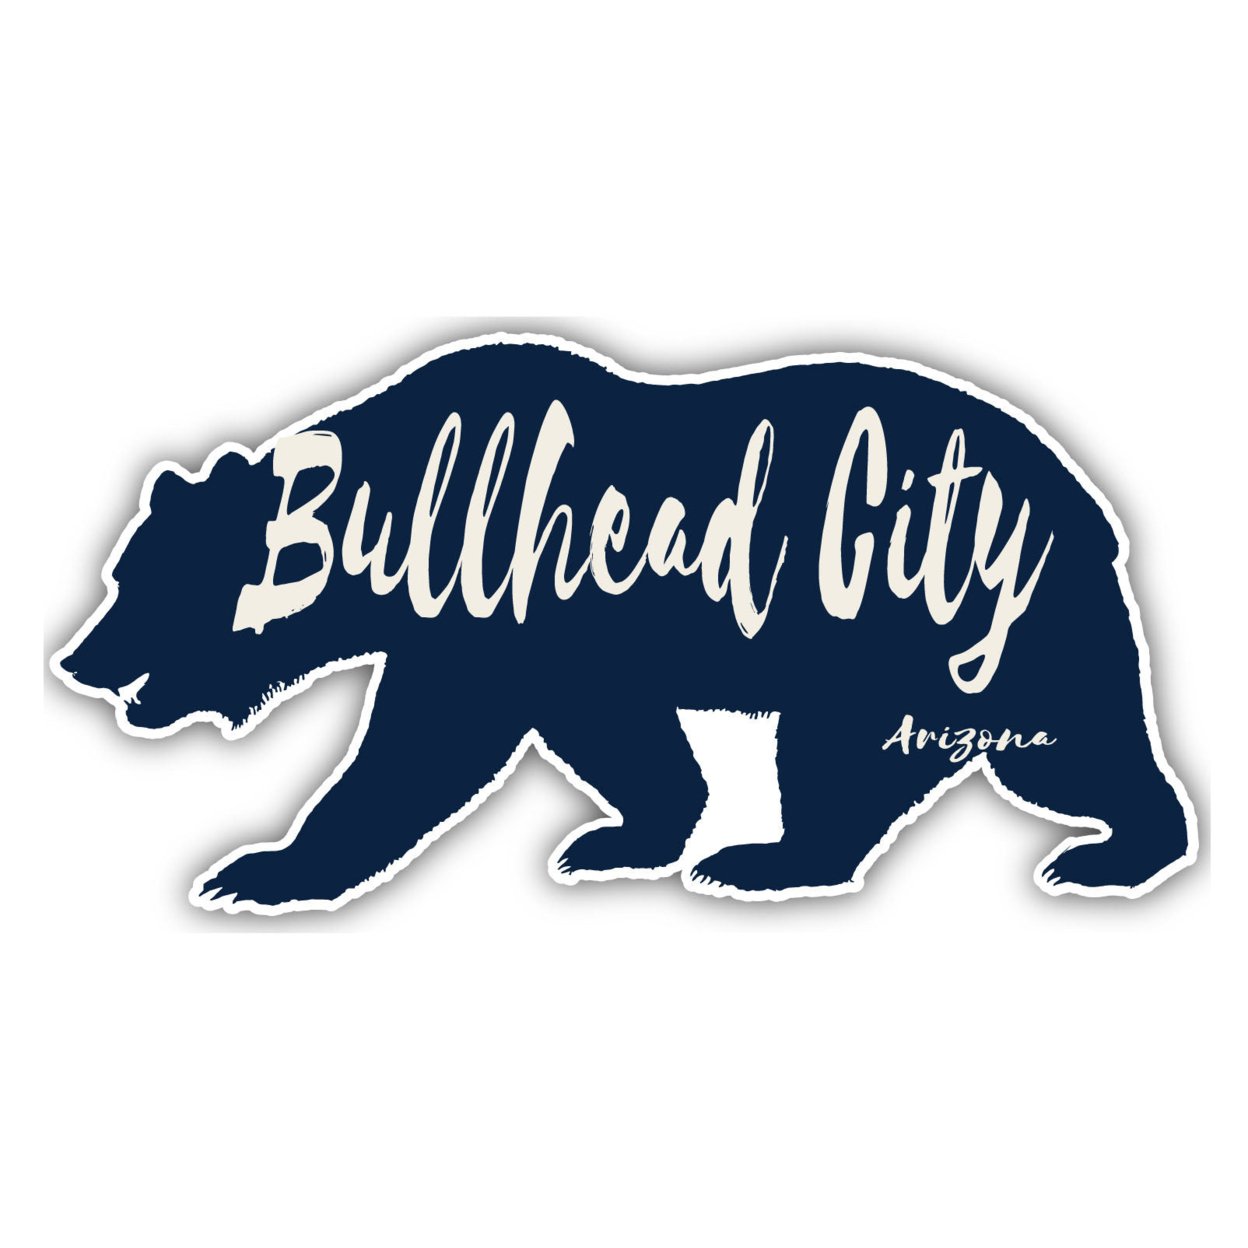 Bullhead City Arizona Souvenir Decorative Stickers (Choose Theme And Size) - 4-Pack, 4-Inch, Bear